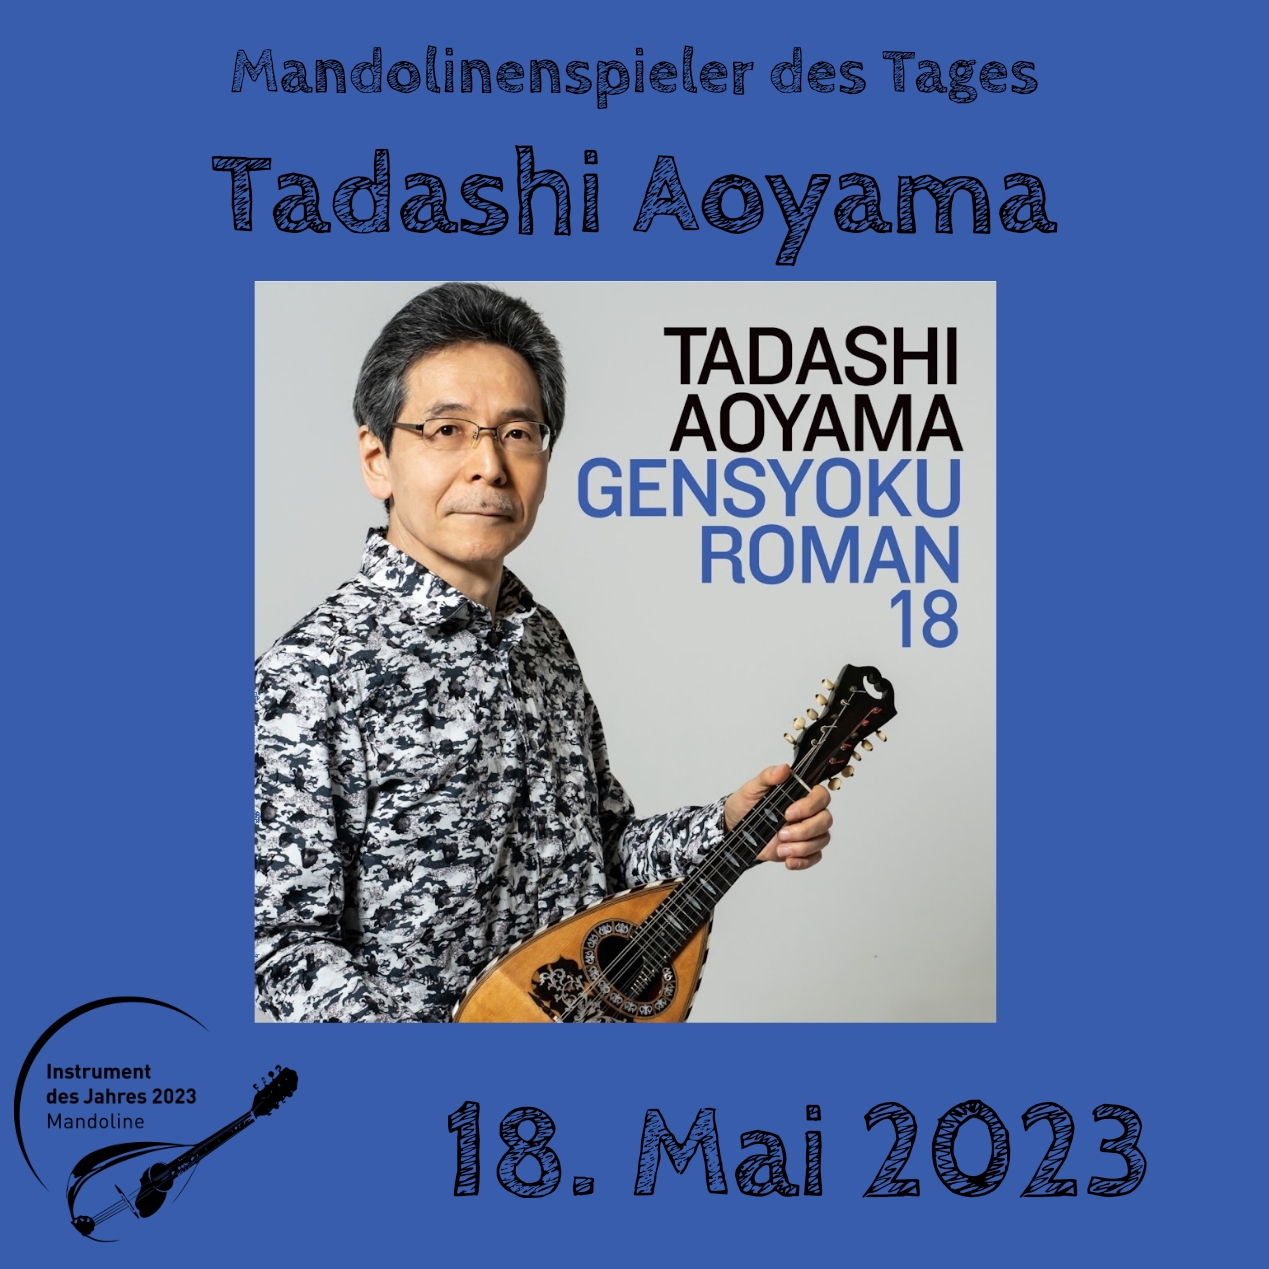 Tadashi Aoyama Mandoline Instrument des Jahres 2023 Mandolinenspieler Mandolinenspielerin des Tages